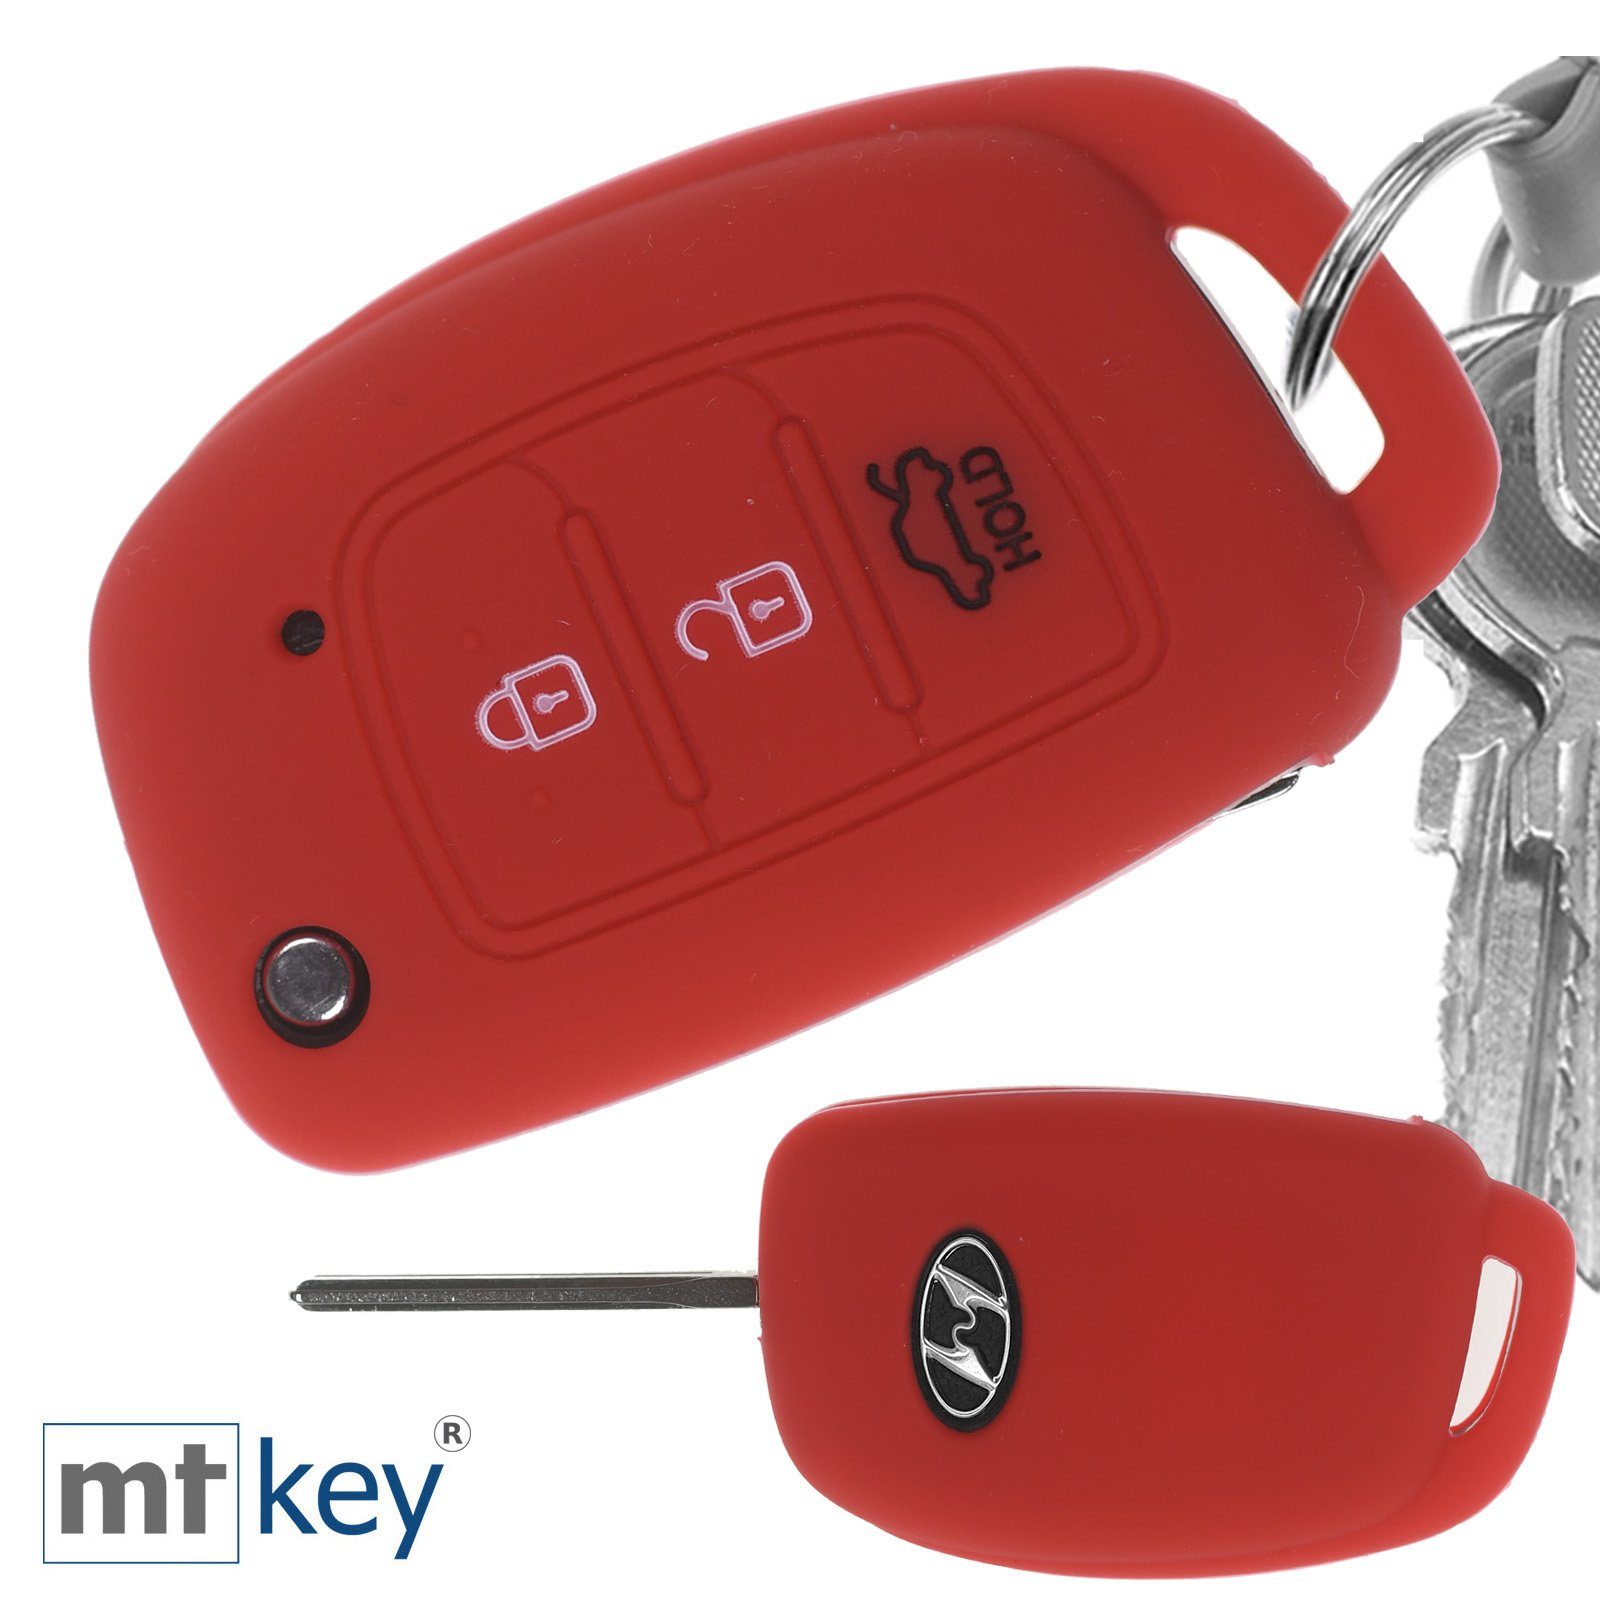 Tucson mit Wabe Knopf Rot im 3 Klappschlüssel mt-key Schlüsselband, i20 Design für i40 Hyundai ix25 Accent Schlüsseltasche Silikon Schutzhülle i10 ix35 Autoschlüssel